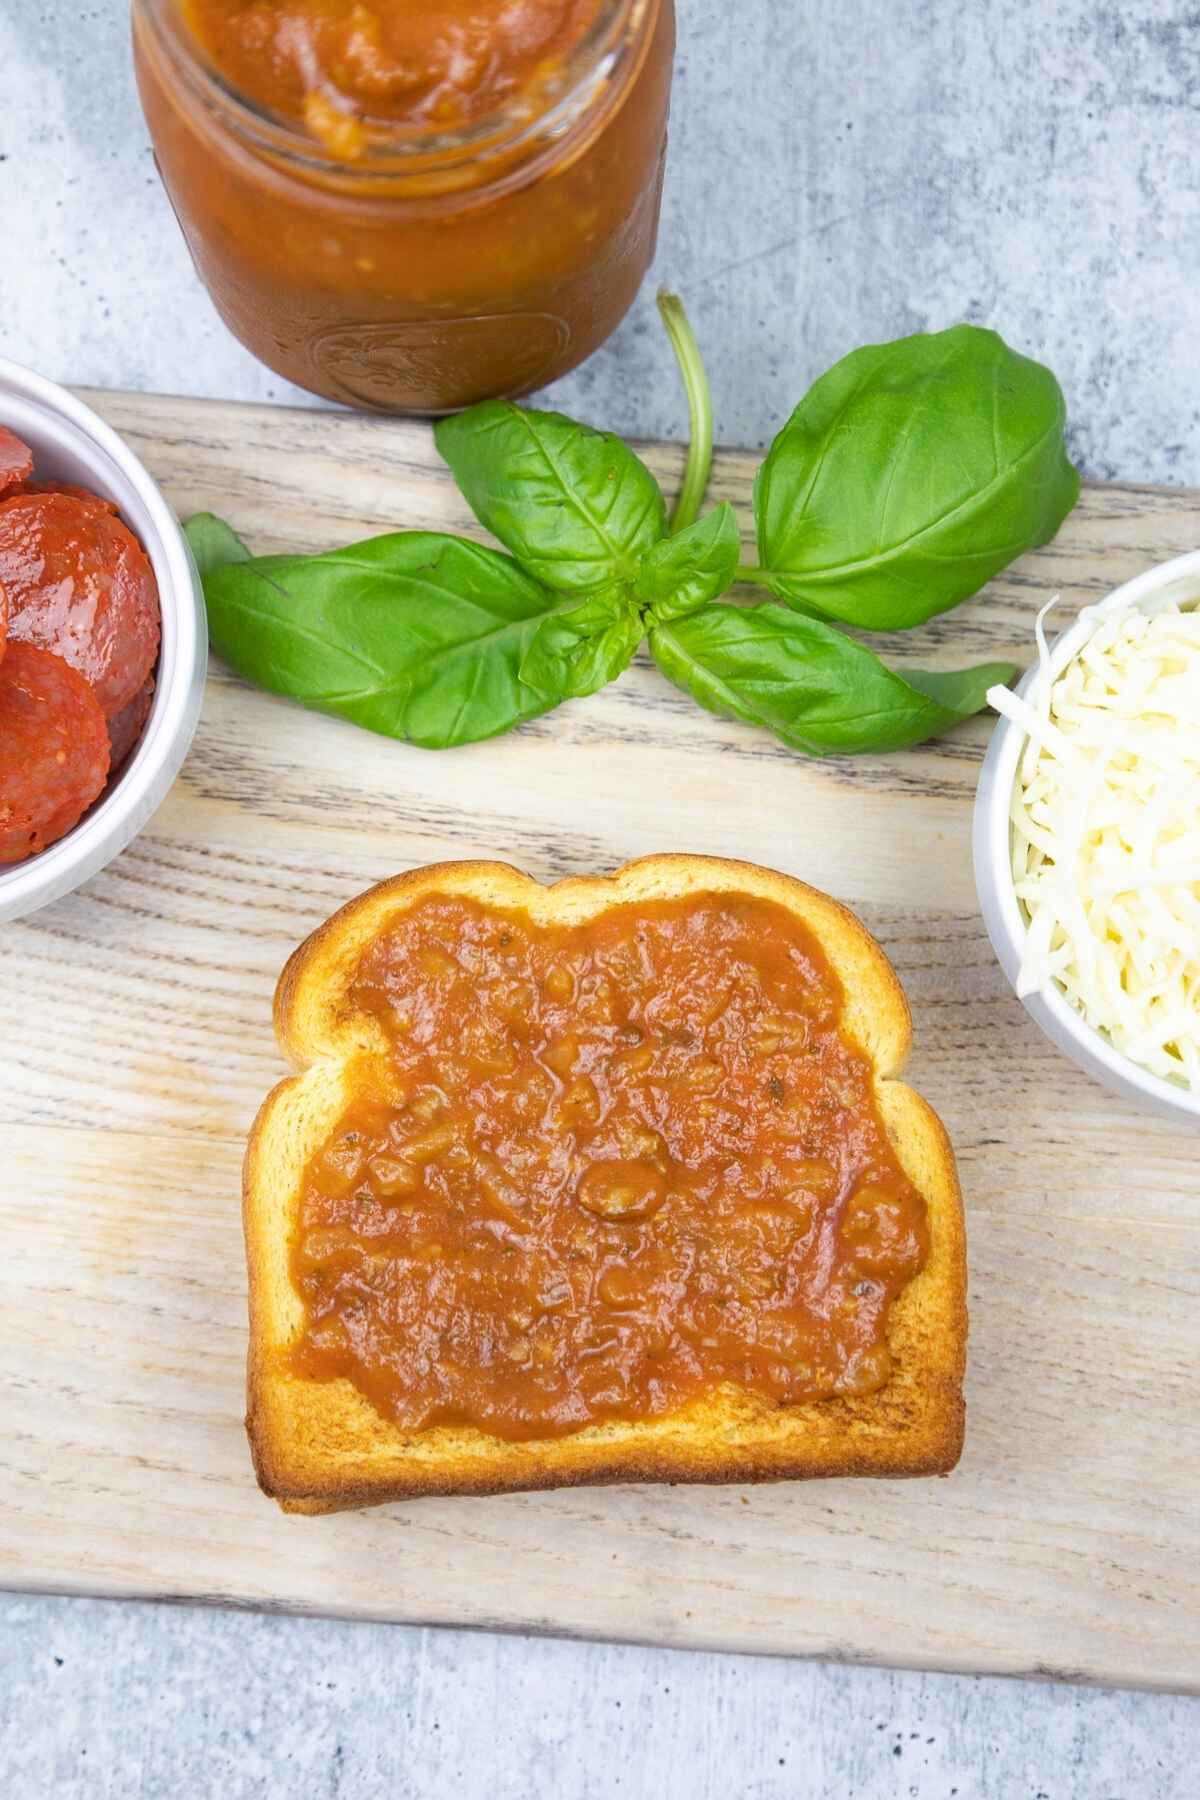 Tomato sauce layer on toasted bread.